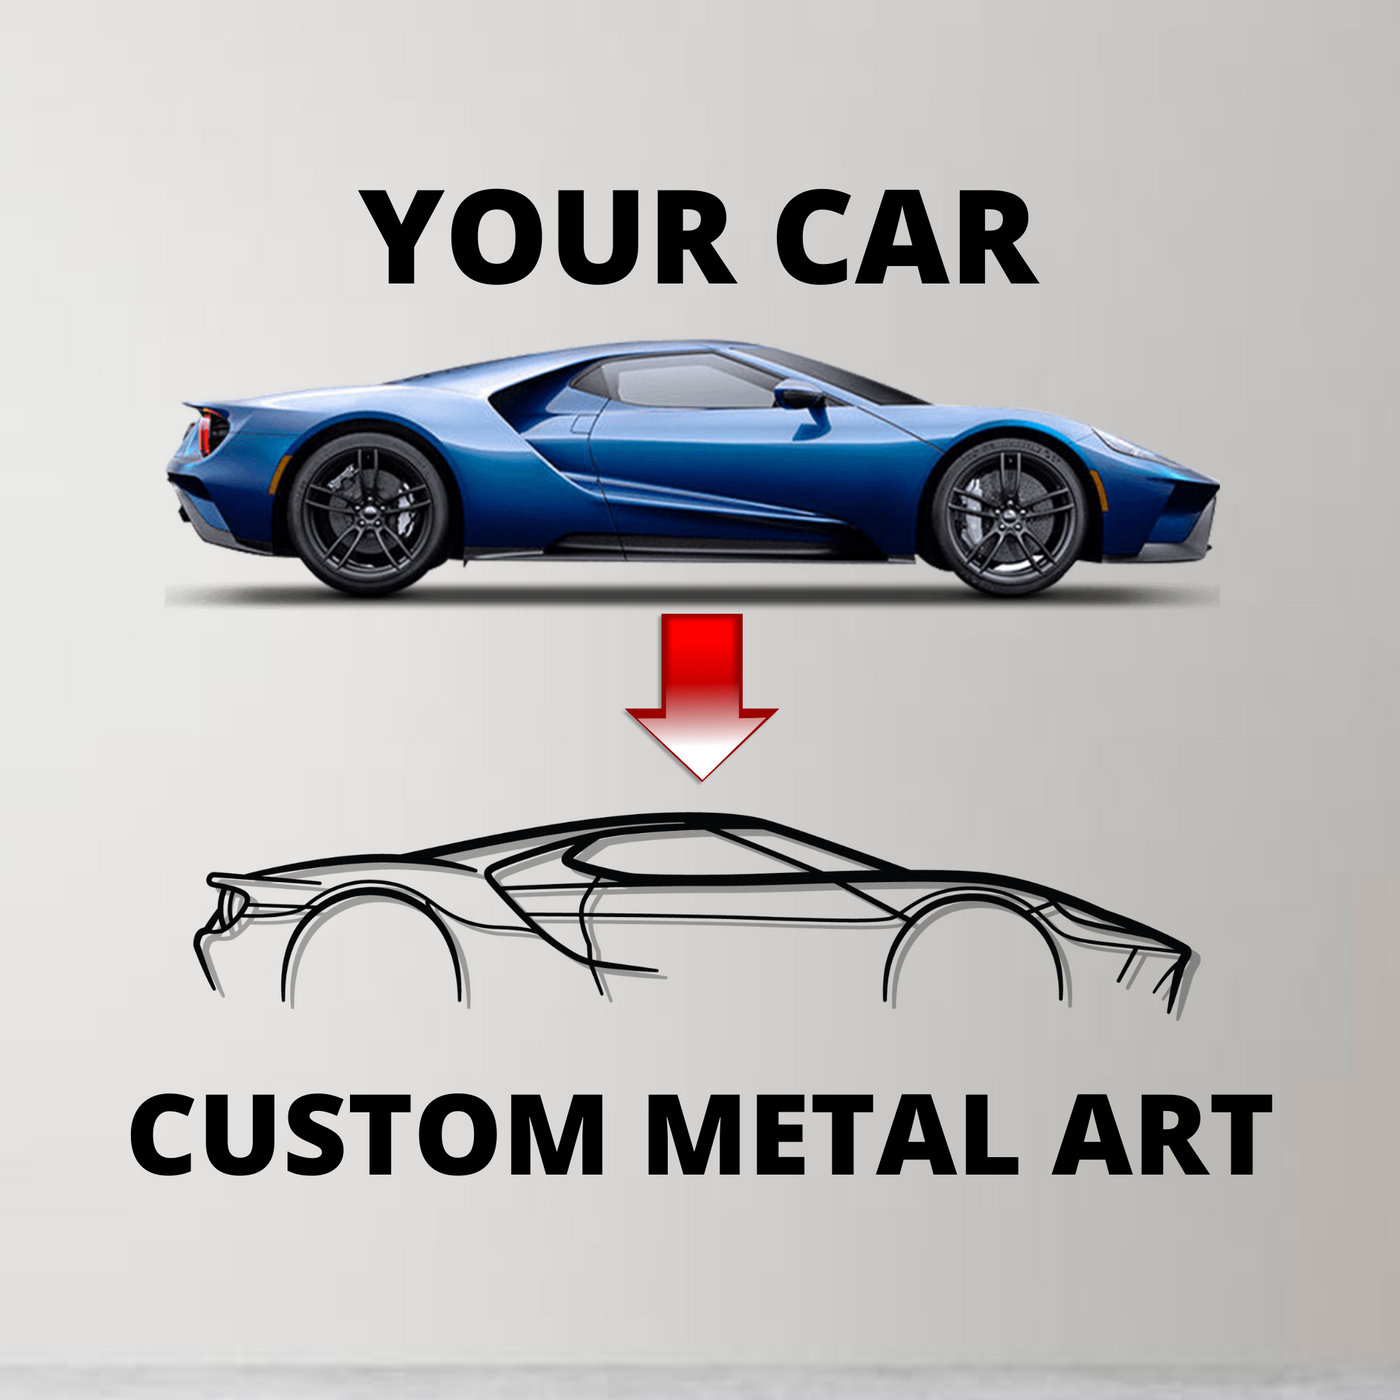 Z4M Roadster e85 Detailed Silhouette Metal Wall Art